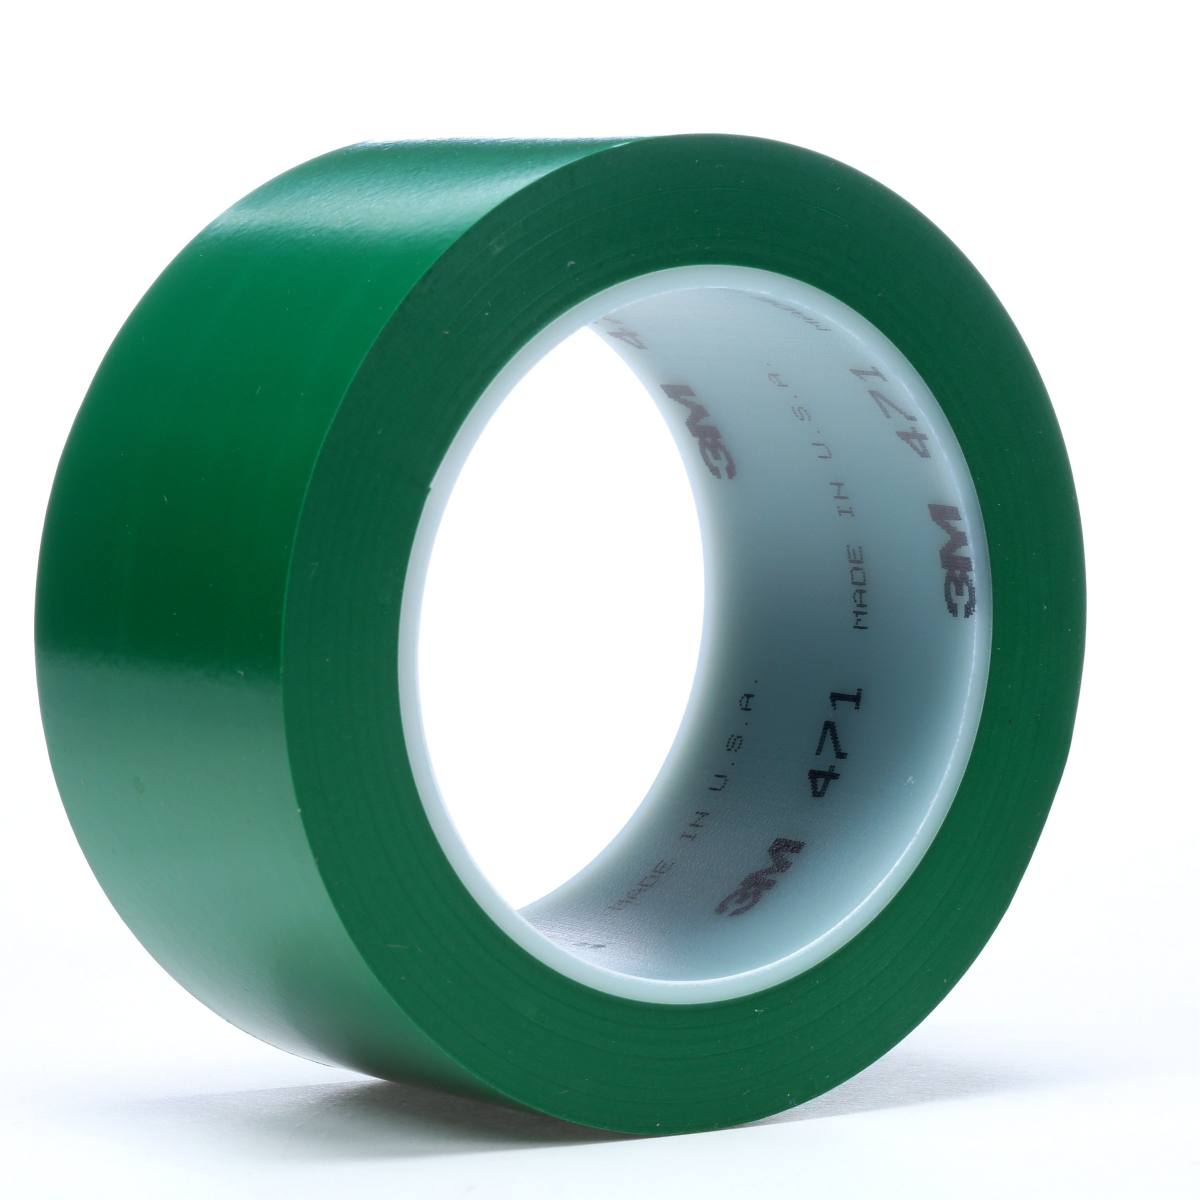 3M ruban adhésif en PVC souple 471 F, vert, 25 mm x 33 m, 0,13 mm